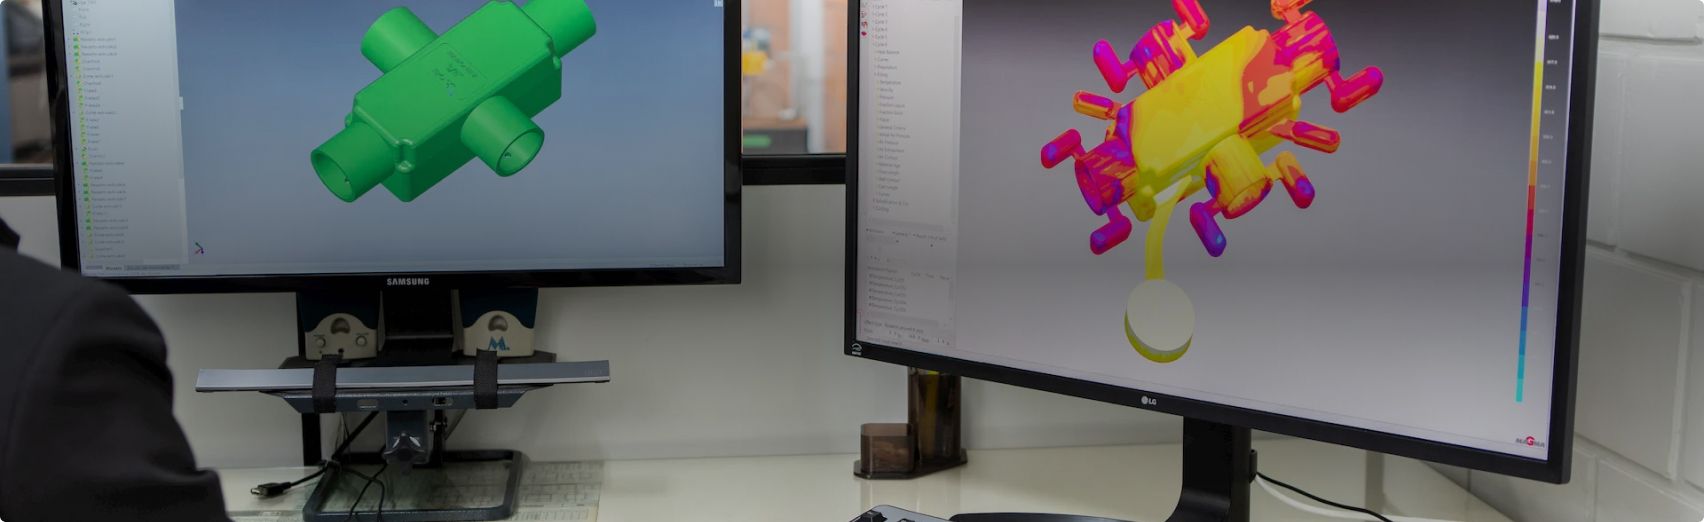 Dos monitores con moldes 3D que se exhiben en la pantalla.